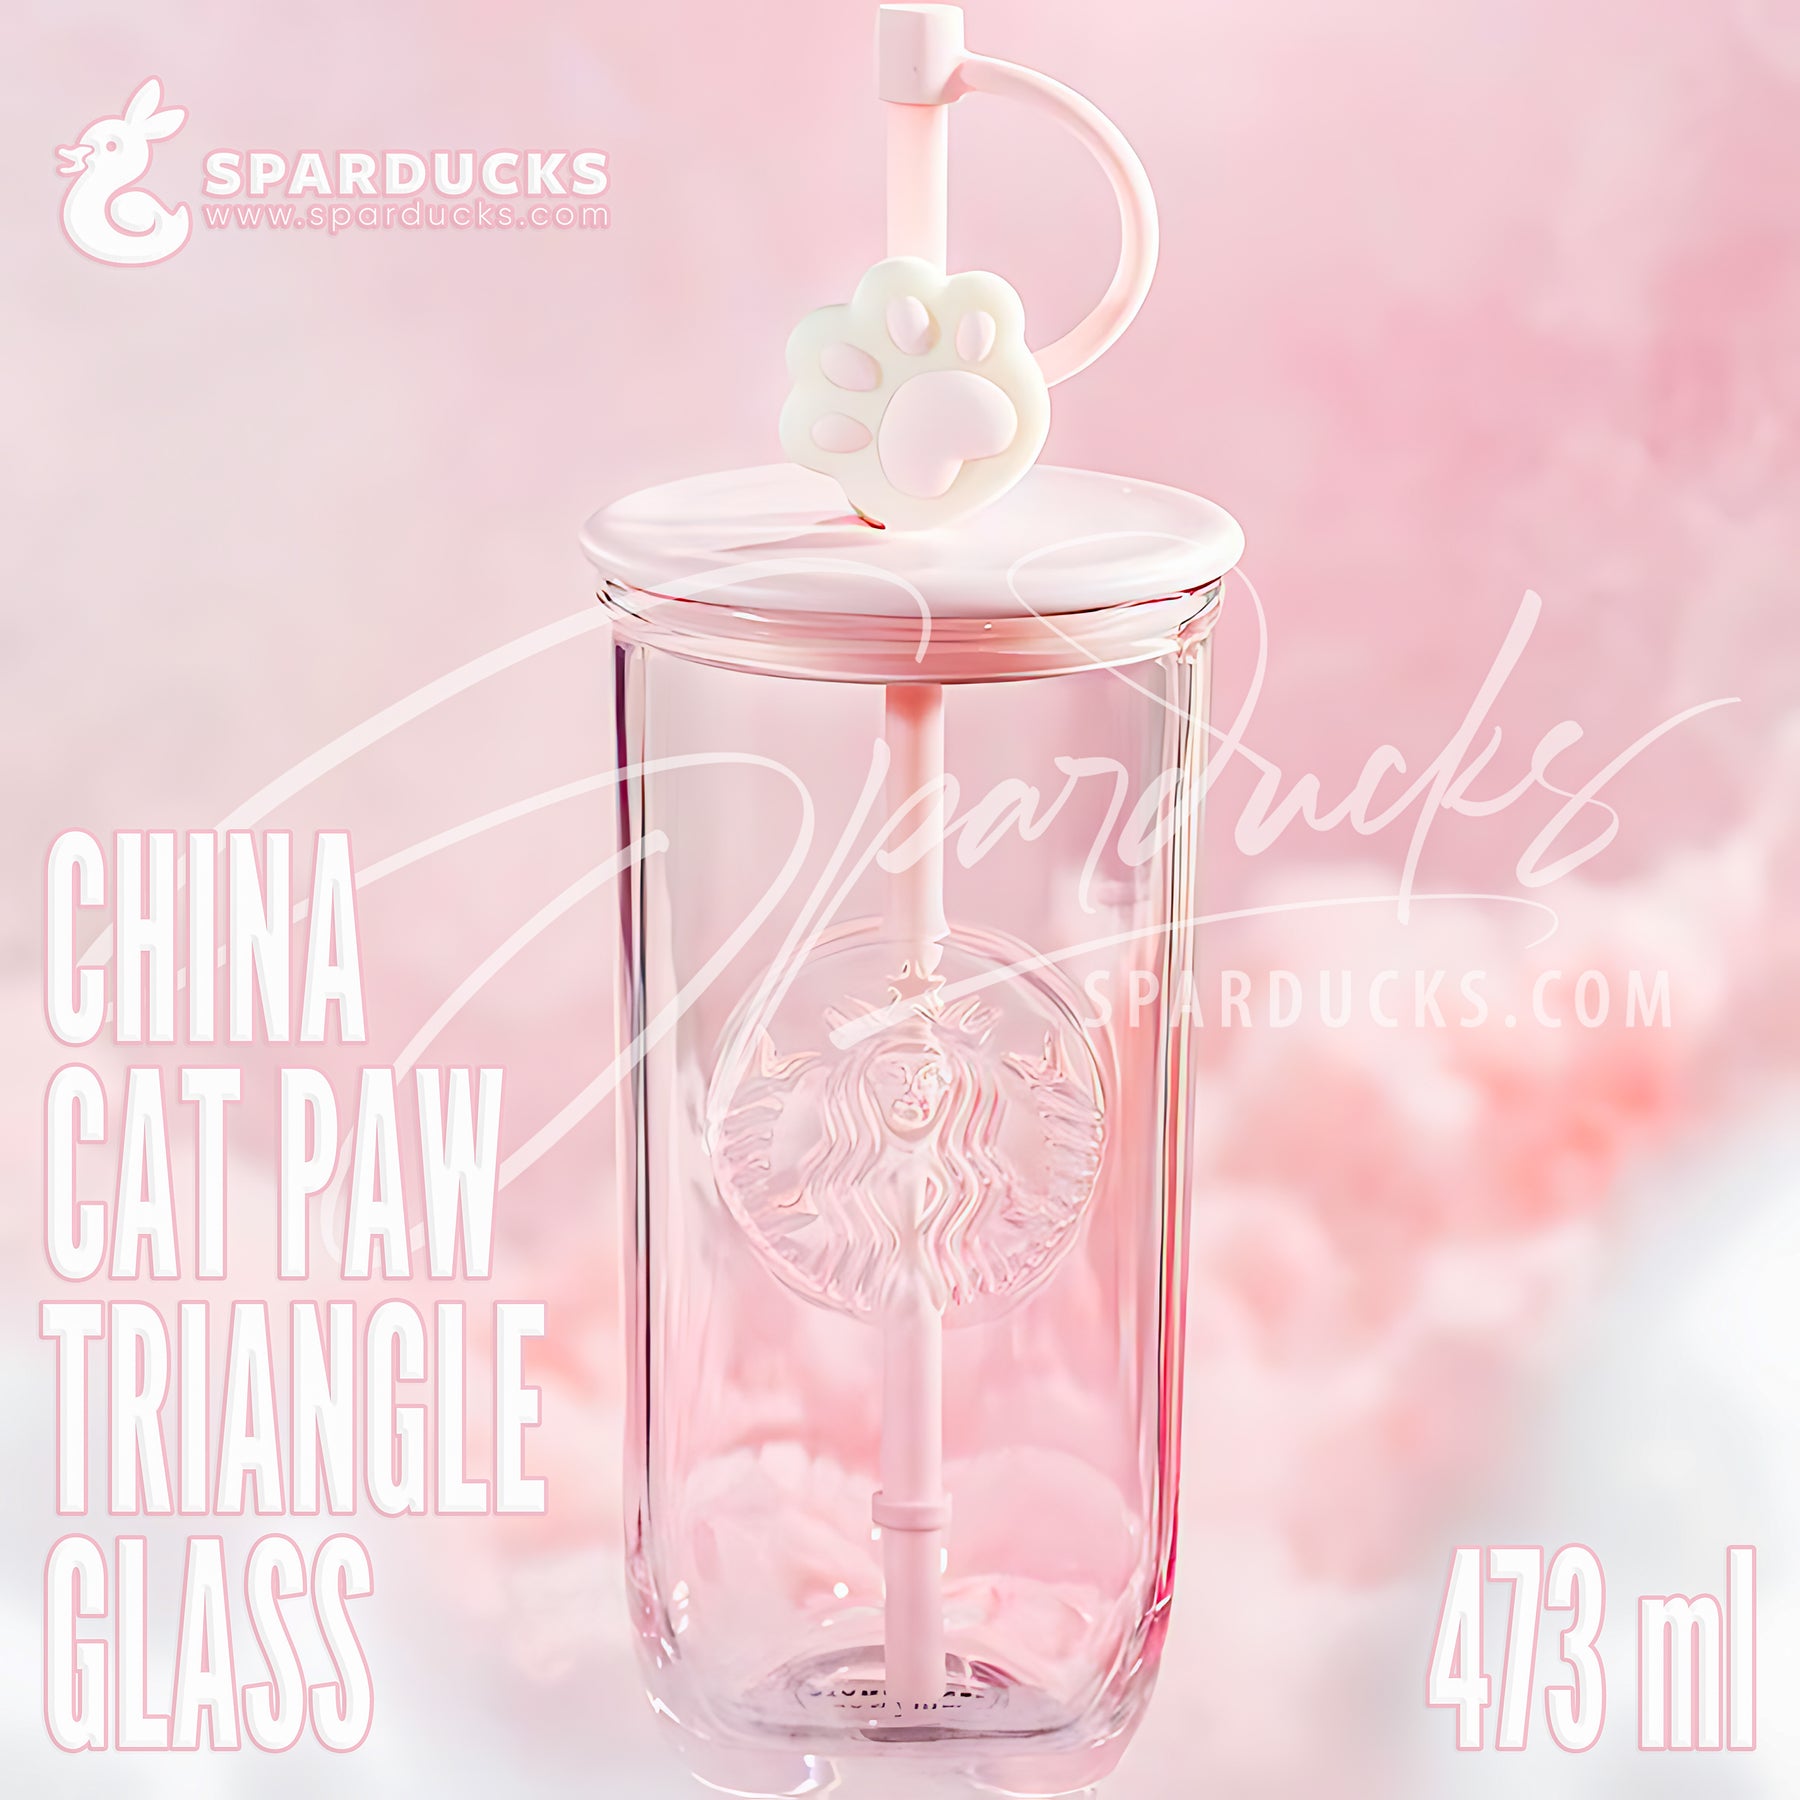 16oz China Pink Cat Paw Triangle Glass